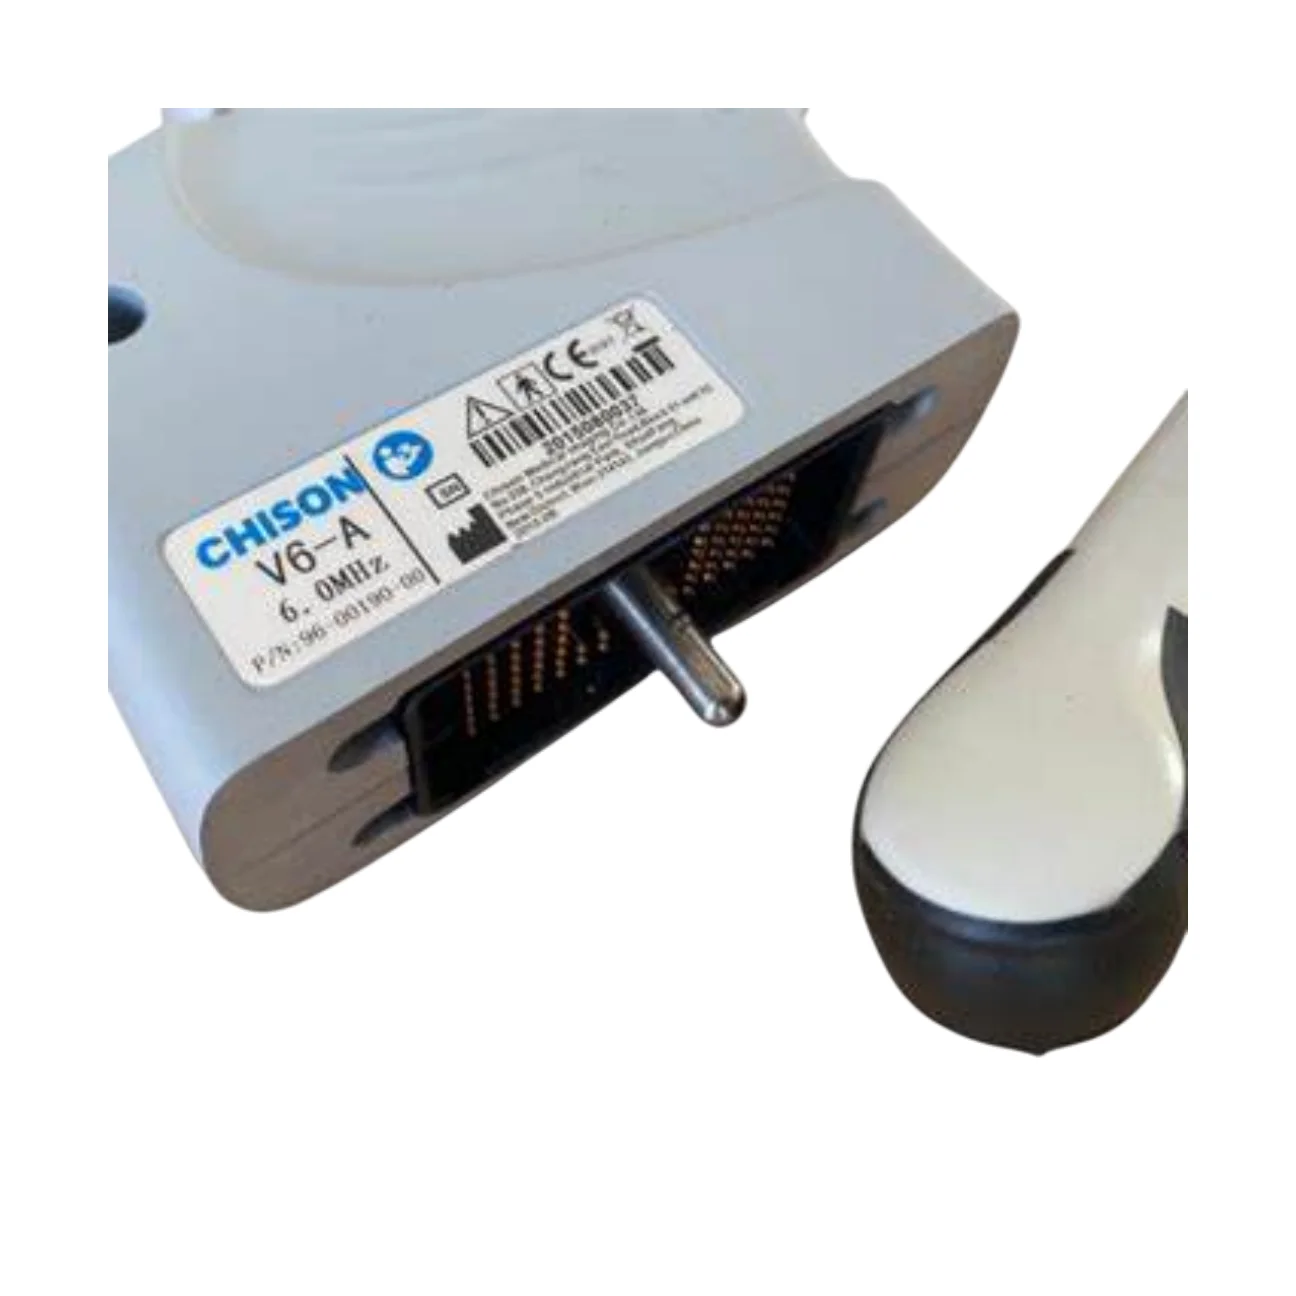 

V6-A For Chison ECO1/2/3 New Compatible Transvaginal Ultrasound Probe Ultrasound Transducer Ultrasonic Sensor